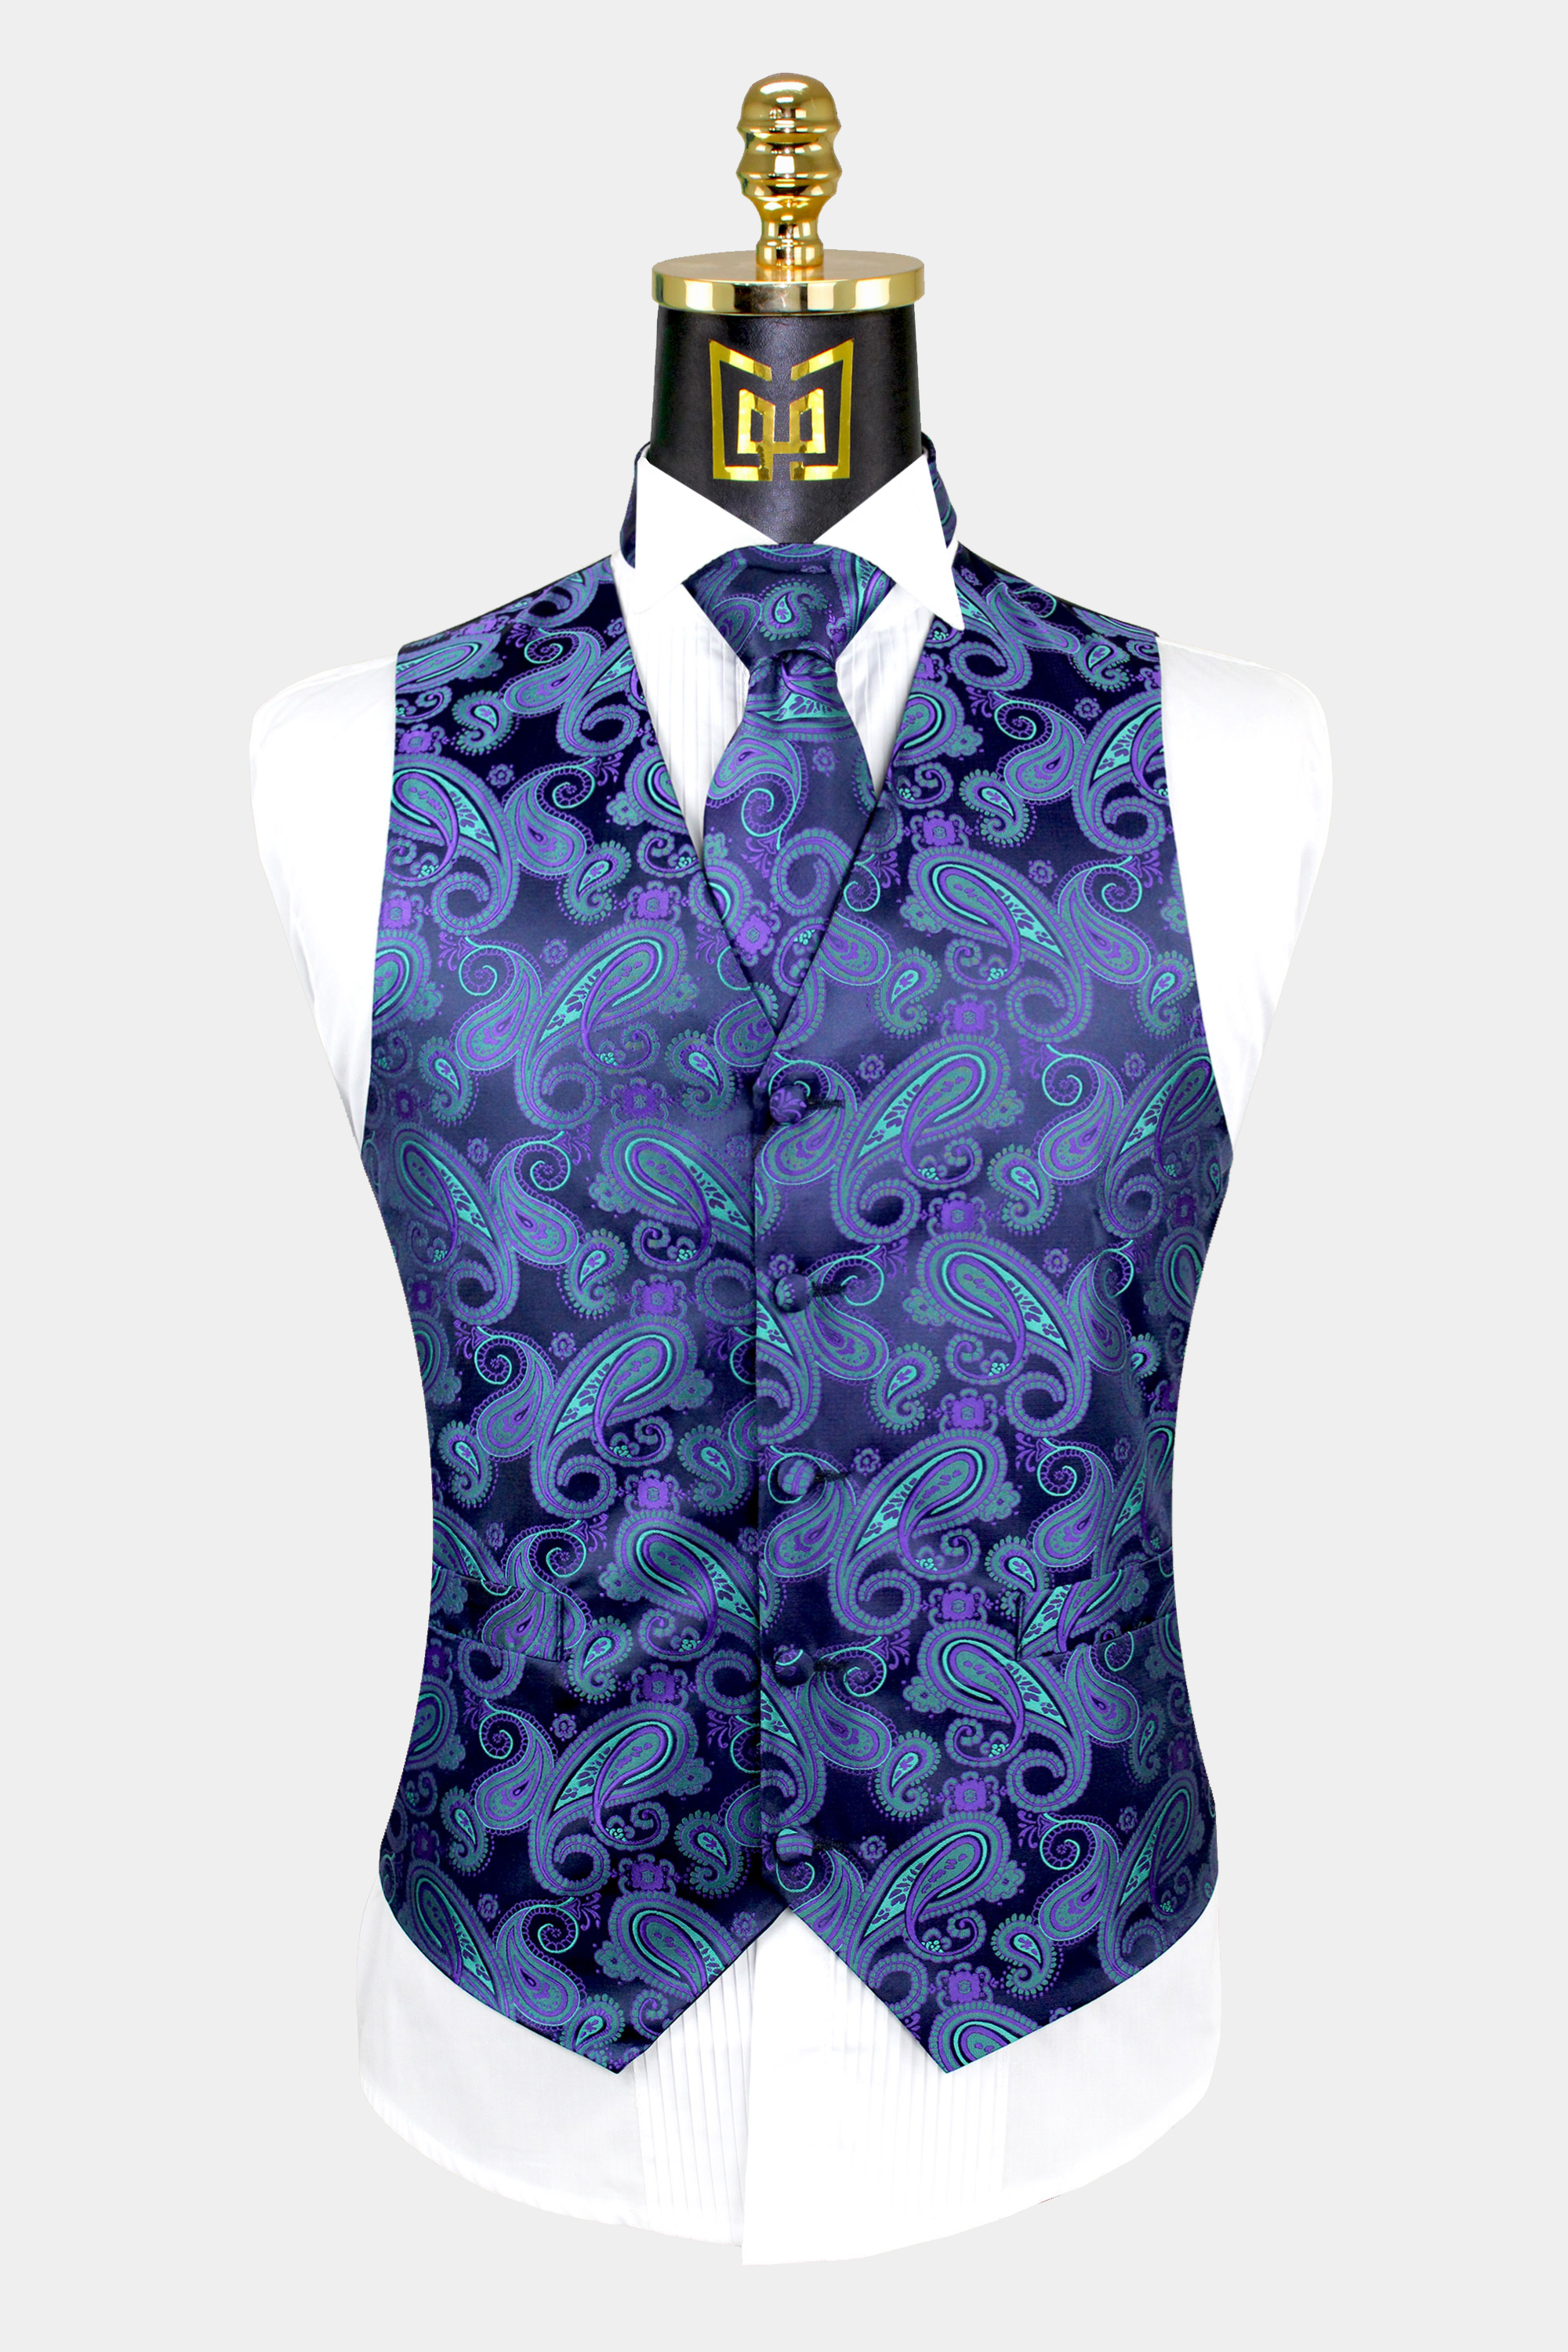 Showu Men's Classic Paisley Vest Suit Set Double Breasted Single Breasted Vest Formal Wedding Business Vest 